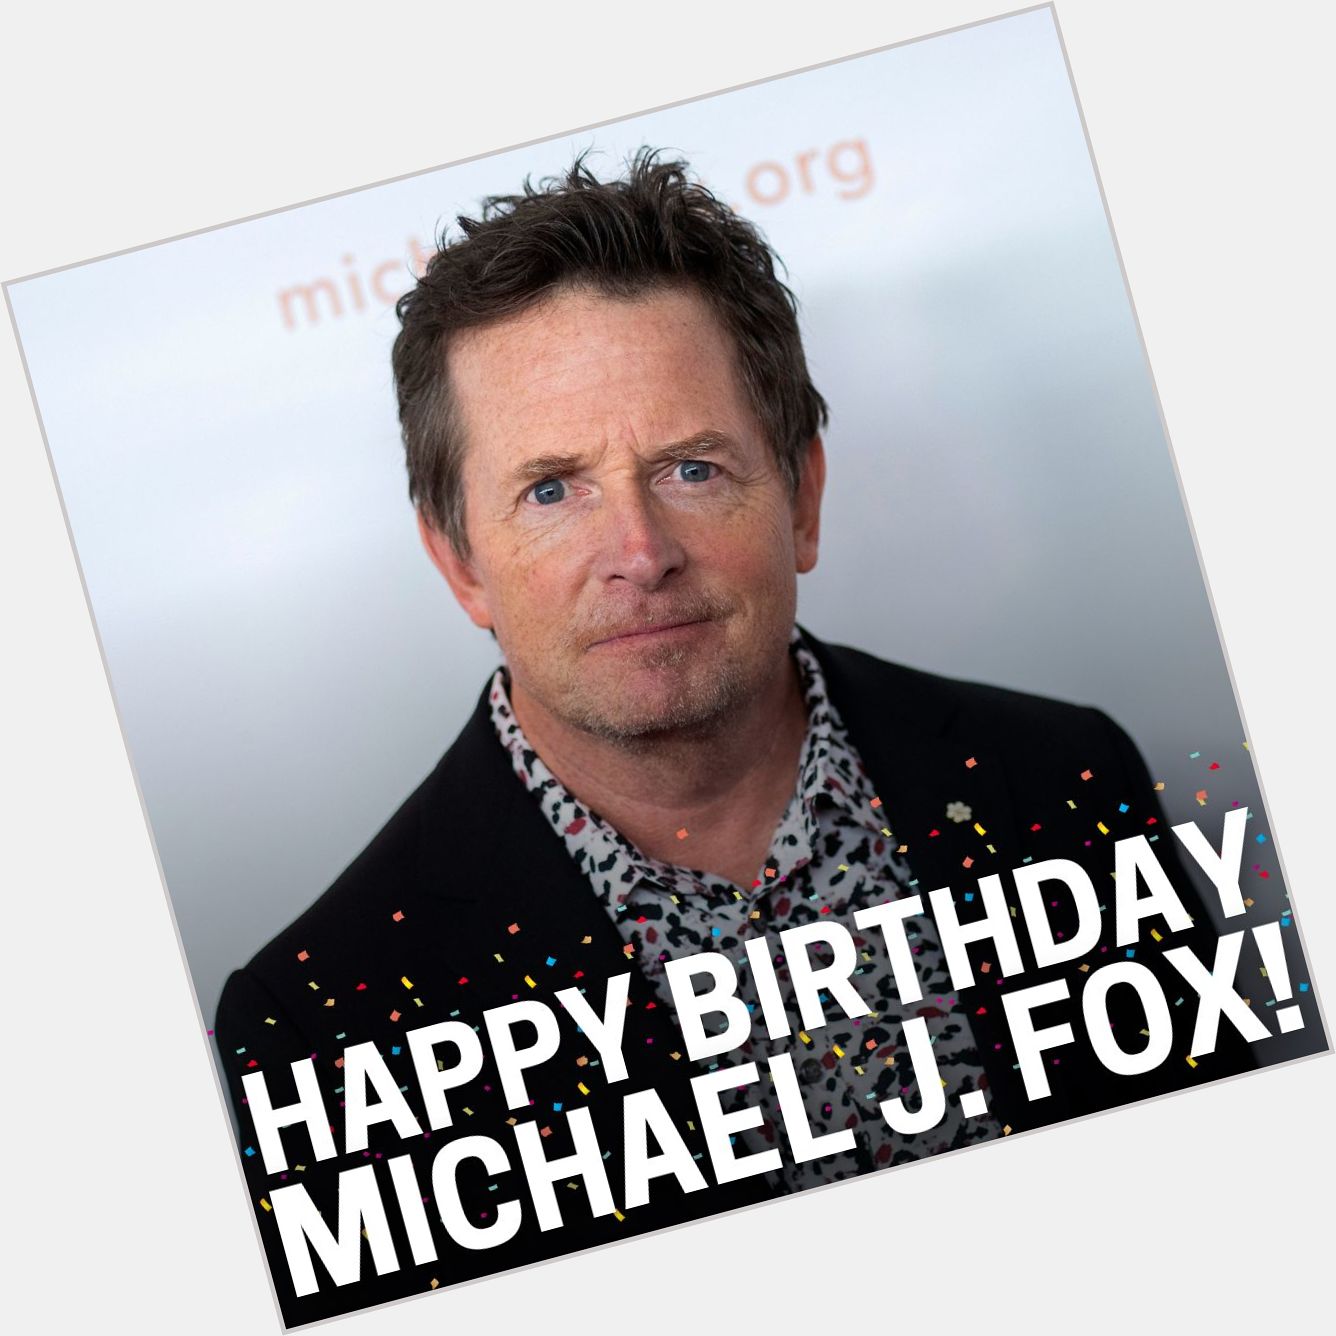 HAPPY BIRTHDAY! What\s your favorite Michael J. Fox movie? 